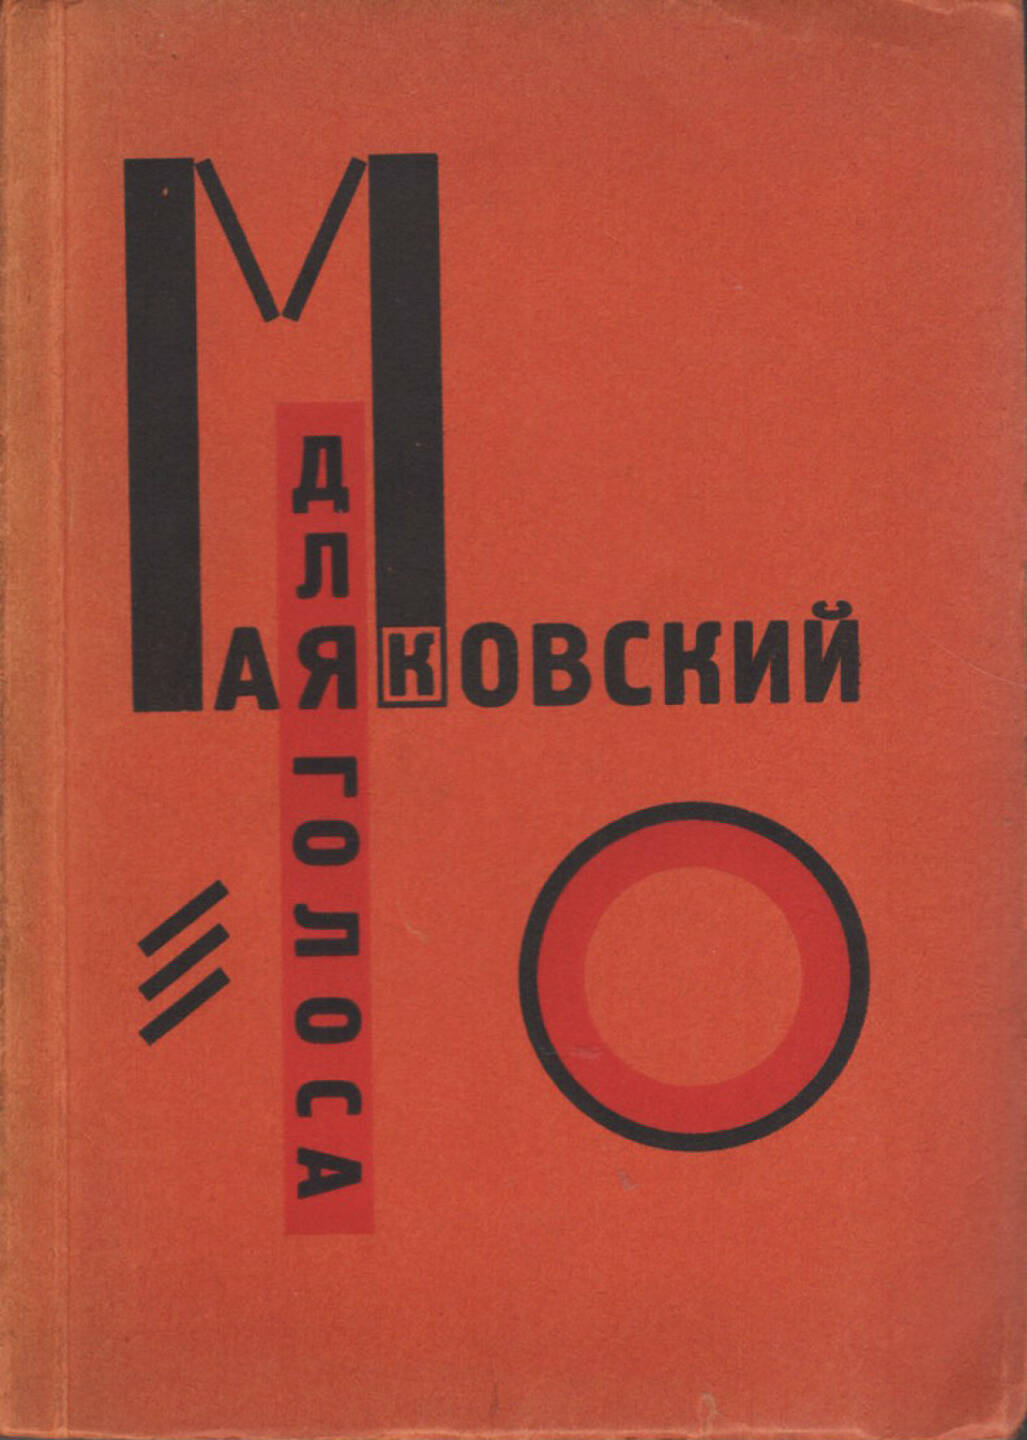 El Lissitzky & Vladimir Mayakovsky - Dlia golosa, Gosizdat / Lutze and Vogt 1923, Cover - http://josefchladek.com/book/el_lissitzky_vladimir_mayakovsky_-_dlia_golosa